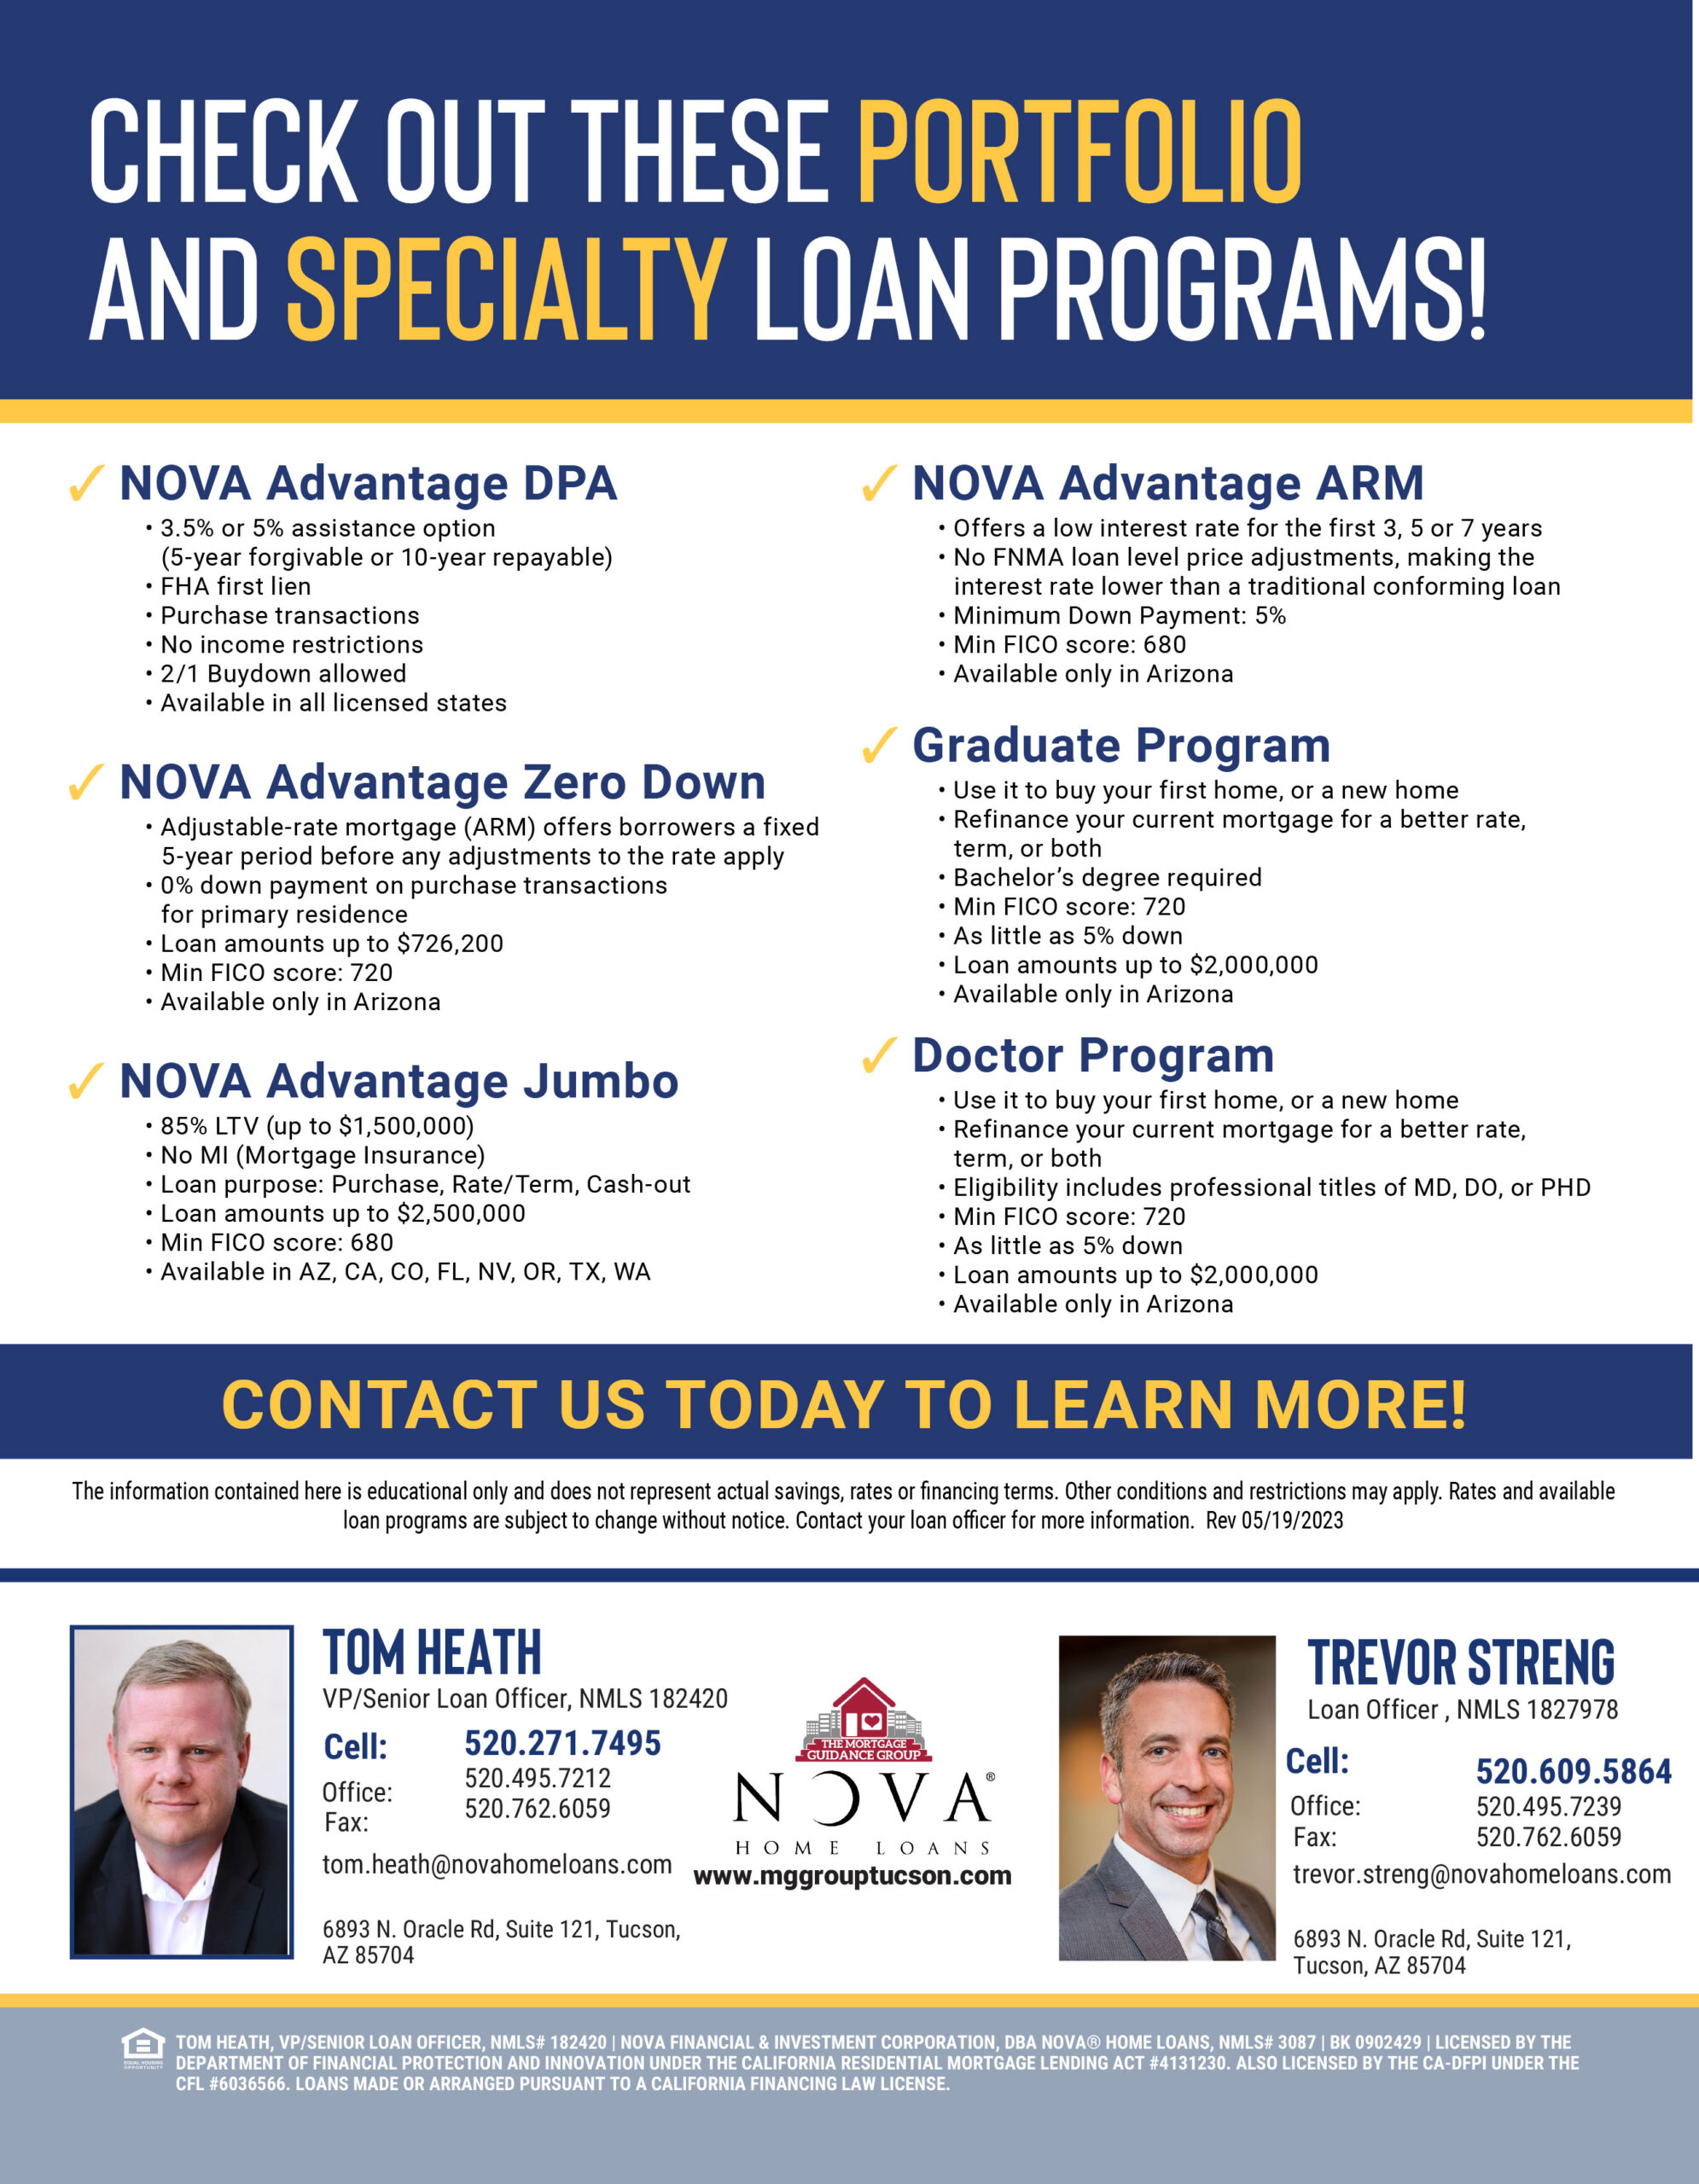 NOVA Specialty Loan Programs